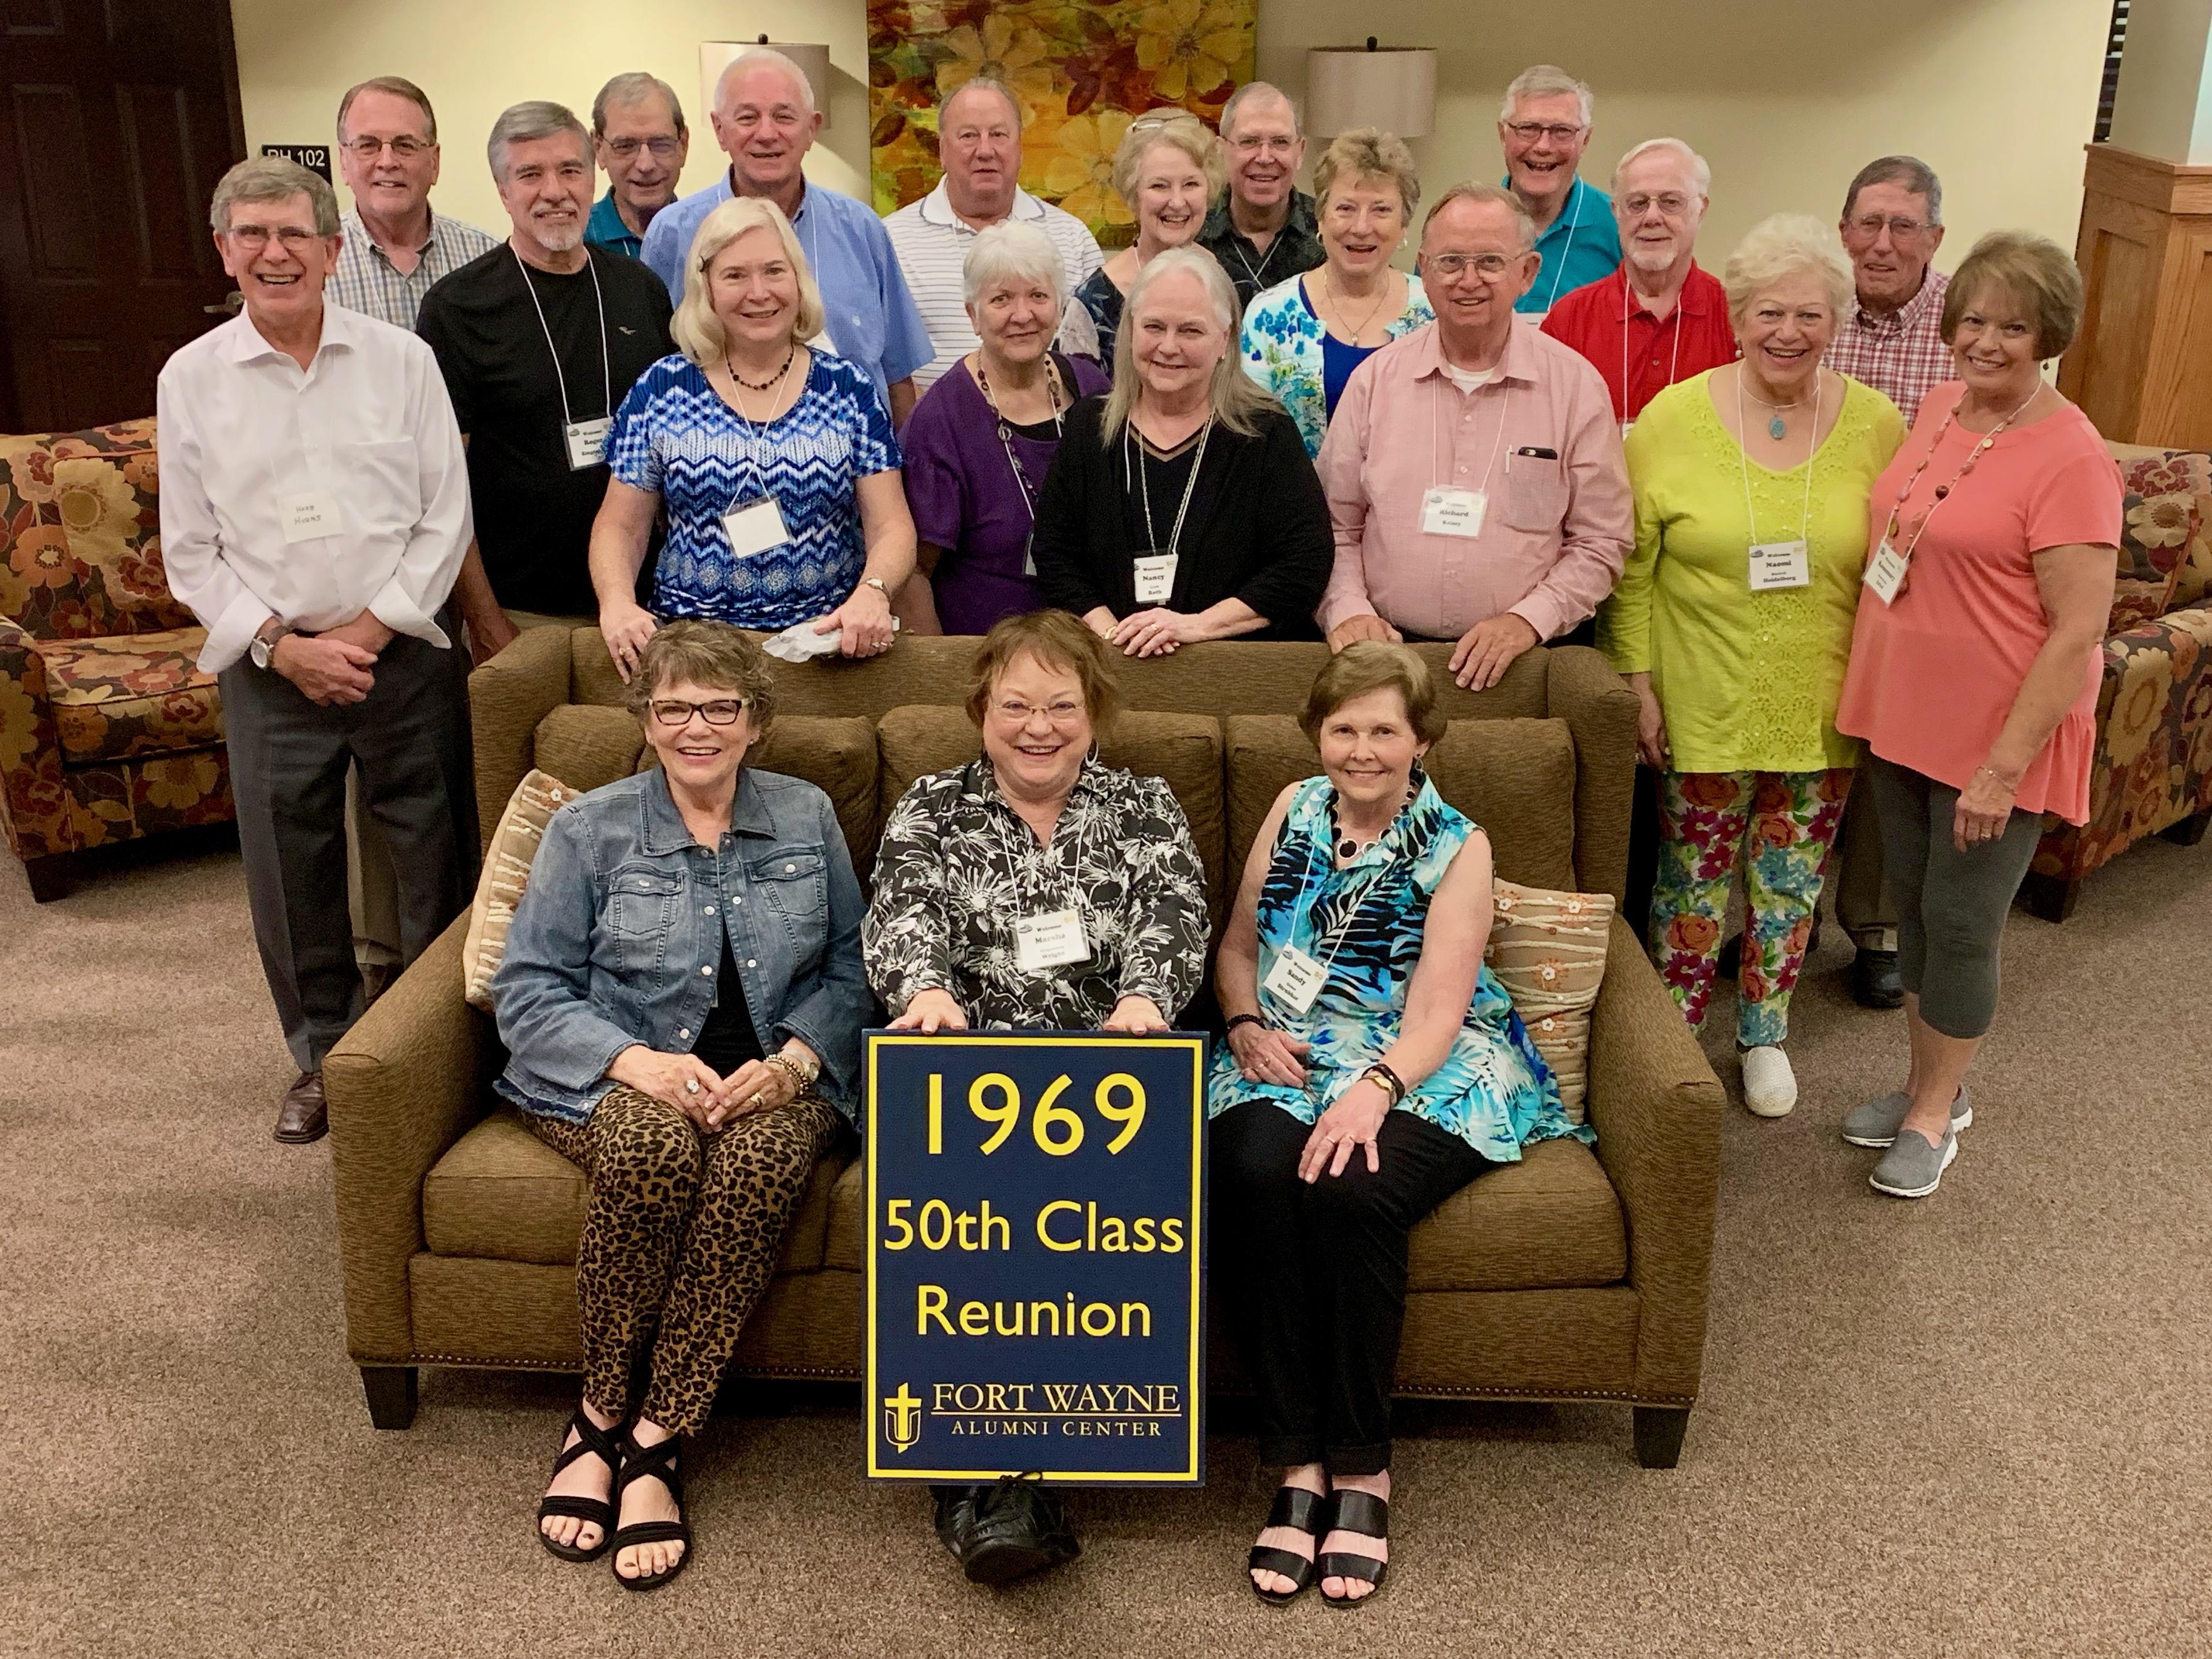 Class of 1969 50 reunion class photo 2